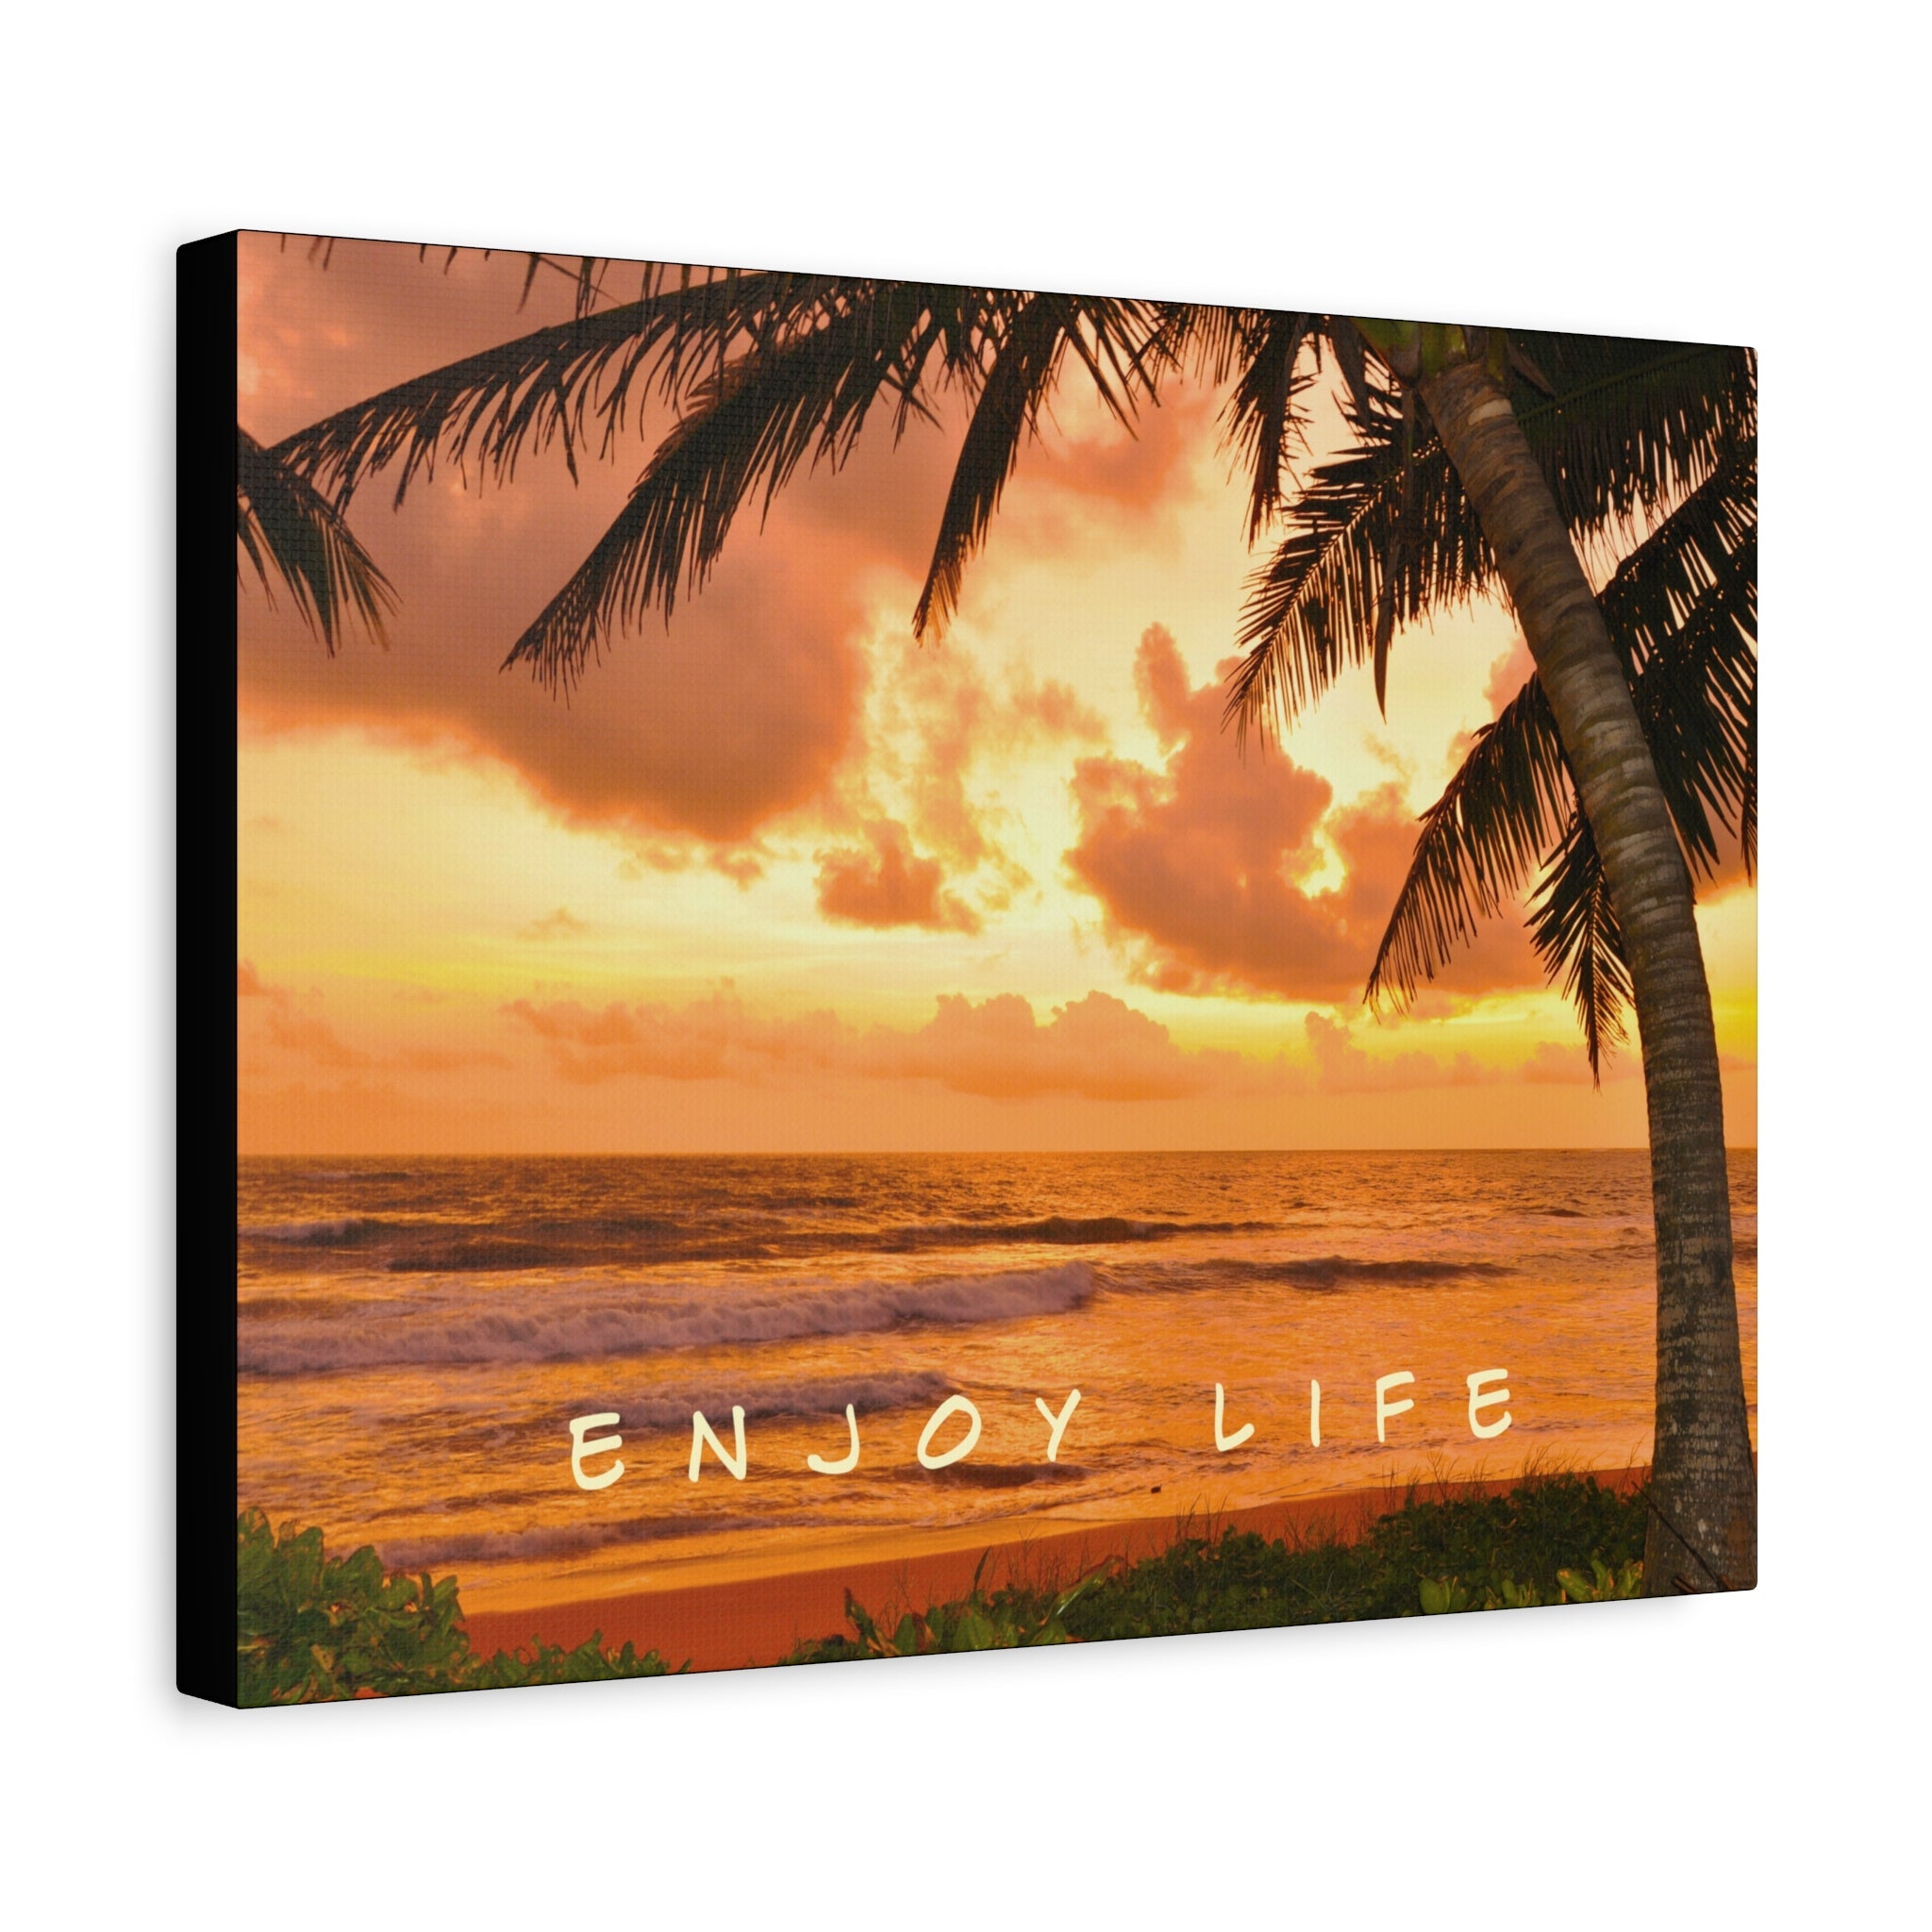 Enjoy Life - Sunset - Wall Art additional image 1